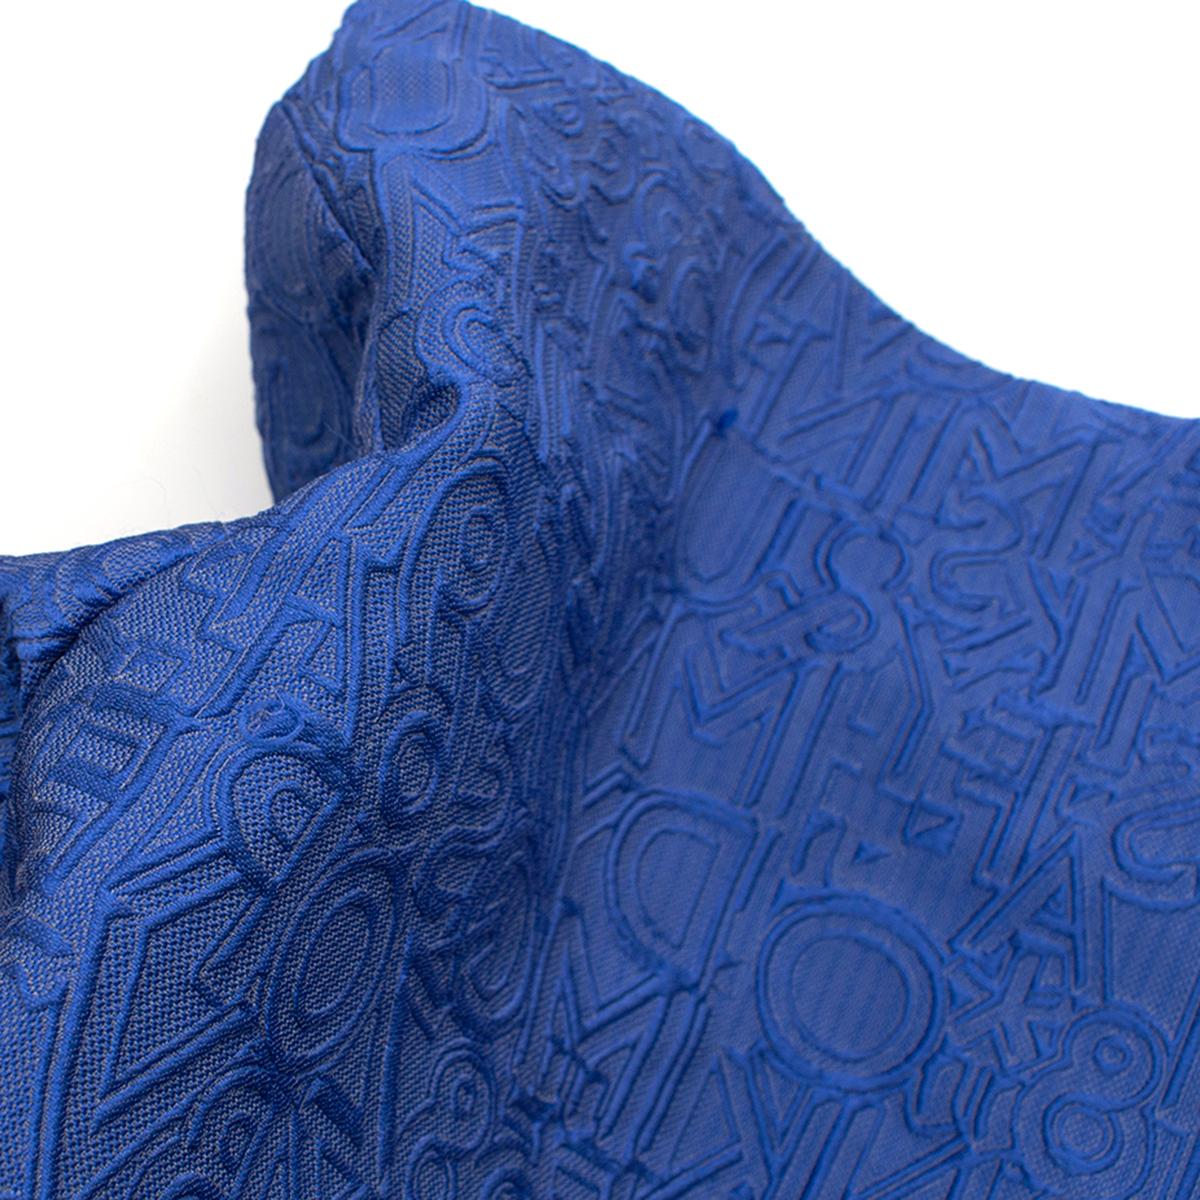 Mary Katrantzou Blue Brocade Twill Coat estimated size S-M For Sale 3